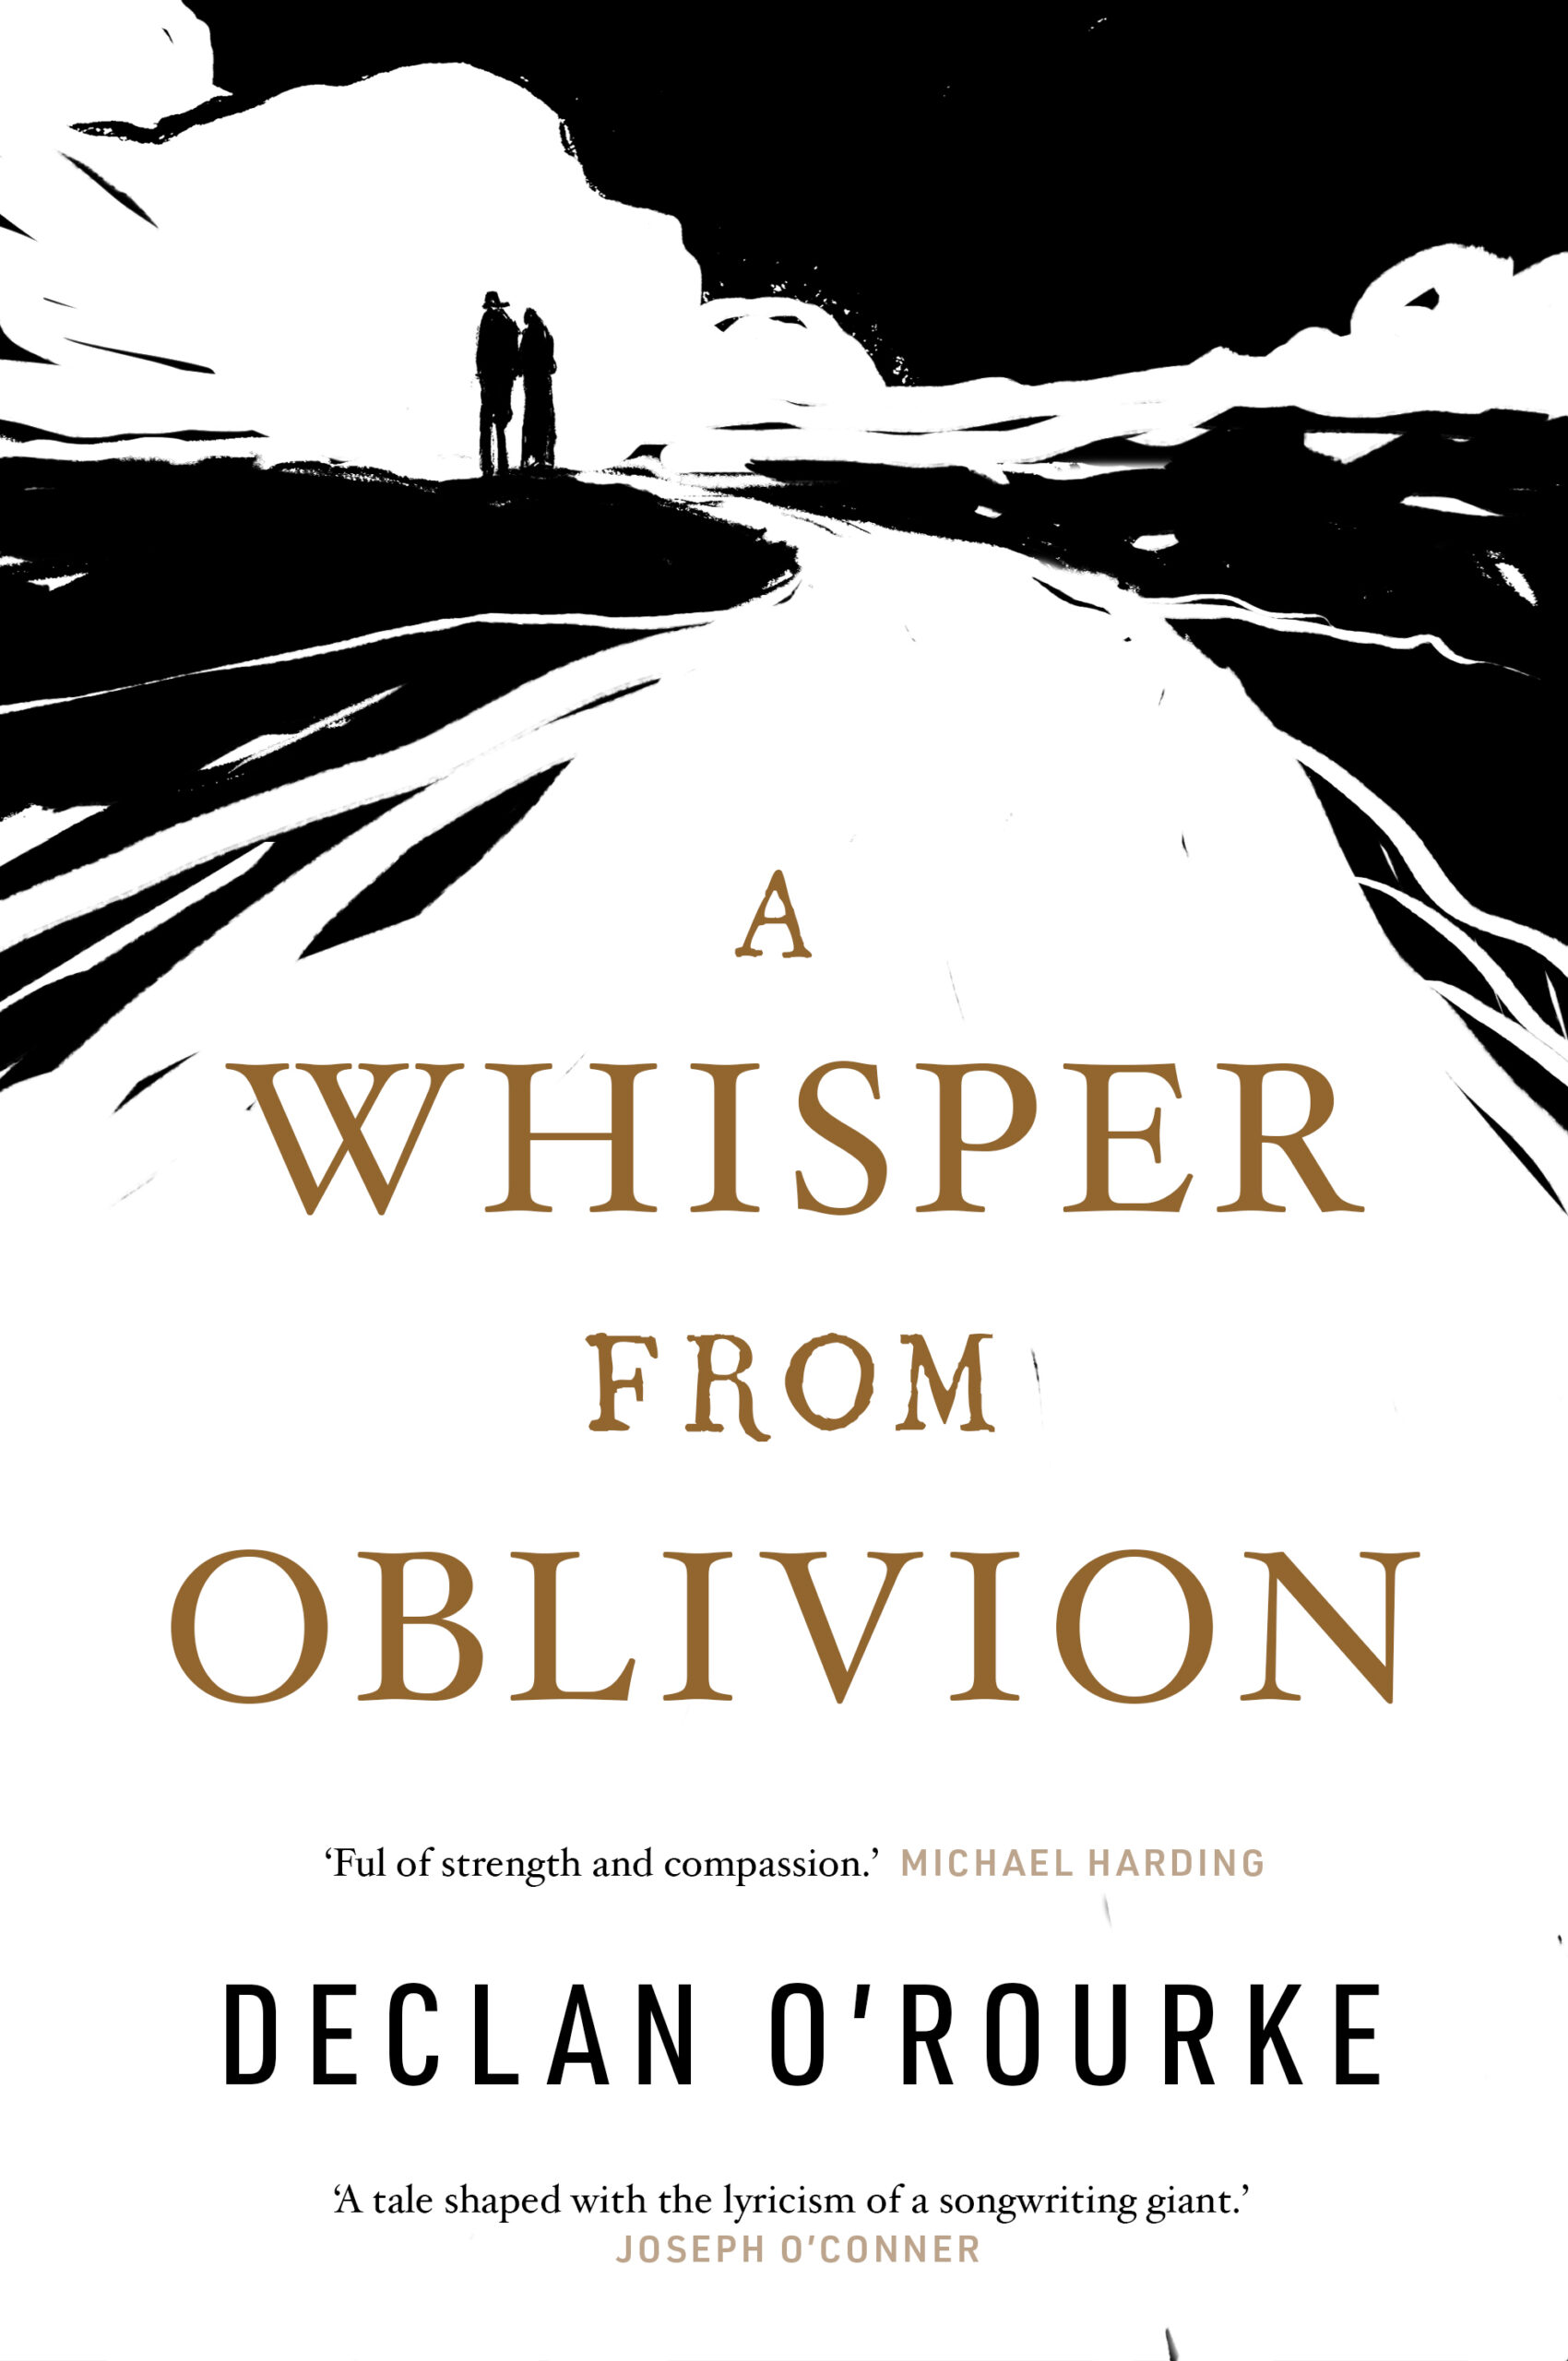 A Whisper from Oblivion by Declan O'Rourke